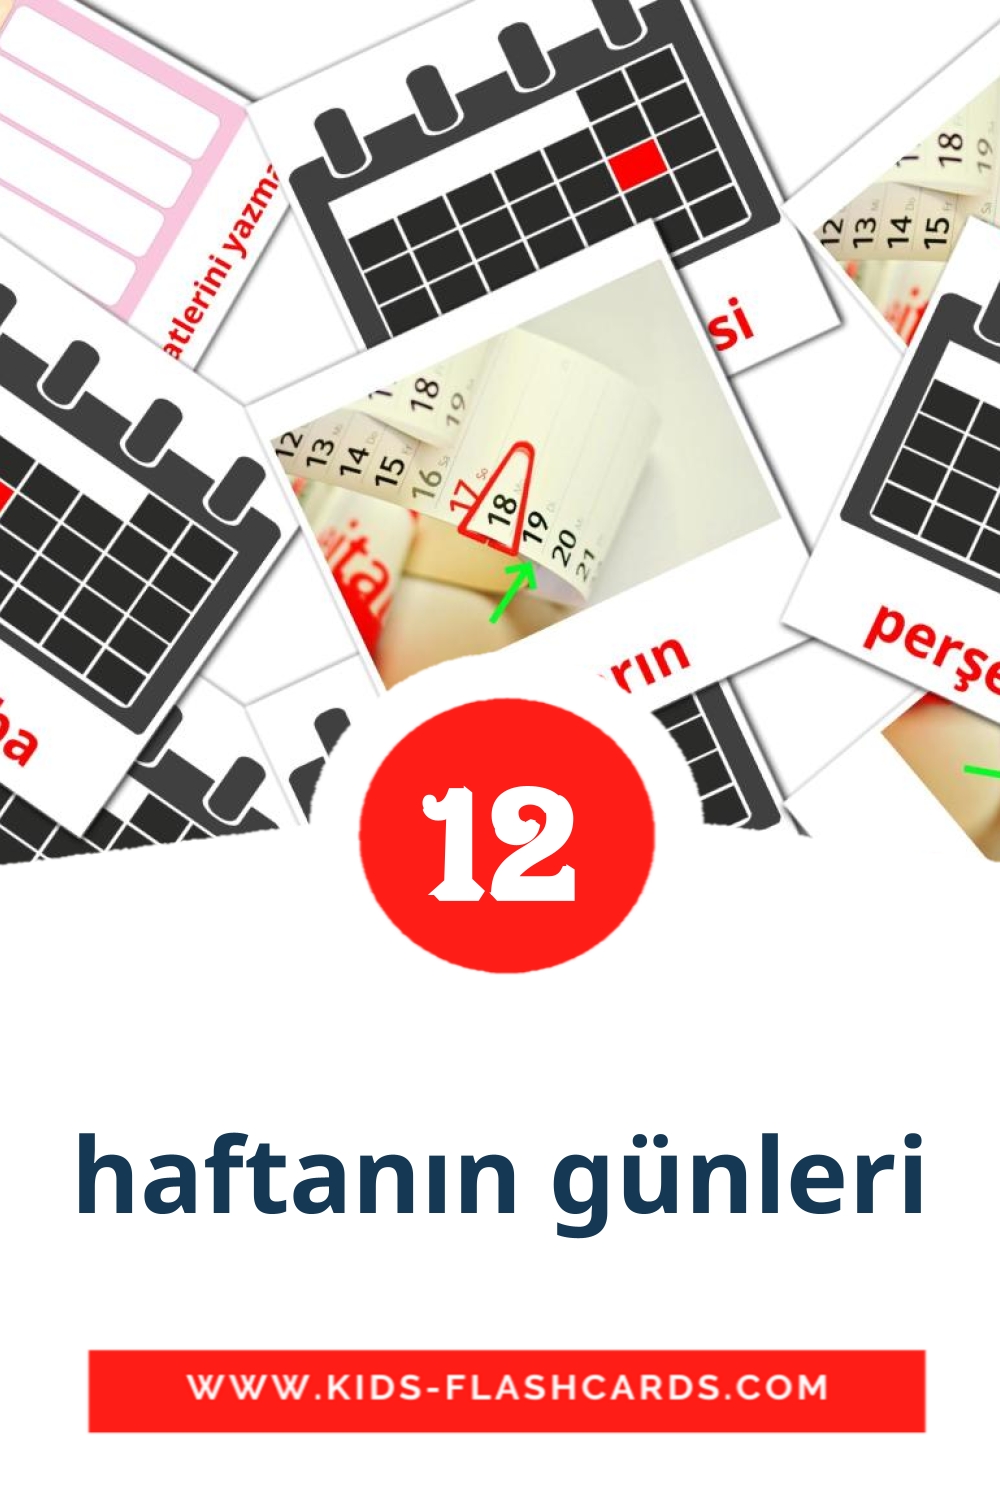 12 Cartões com Imagens de haftanın günleri para Jardim de Infância em turco